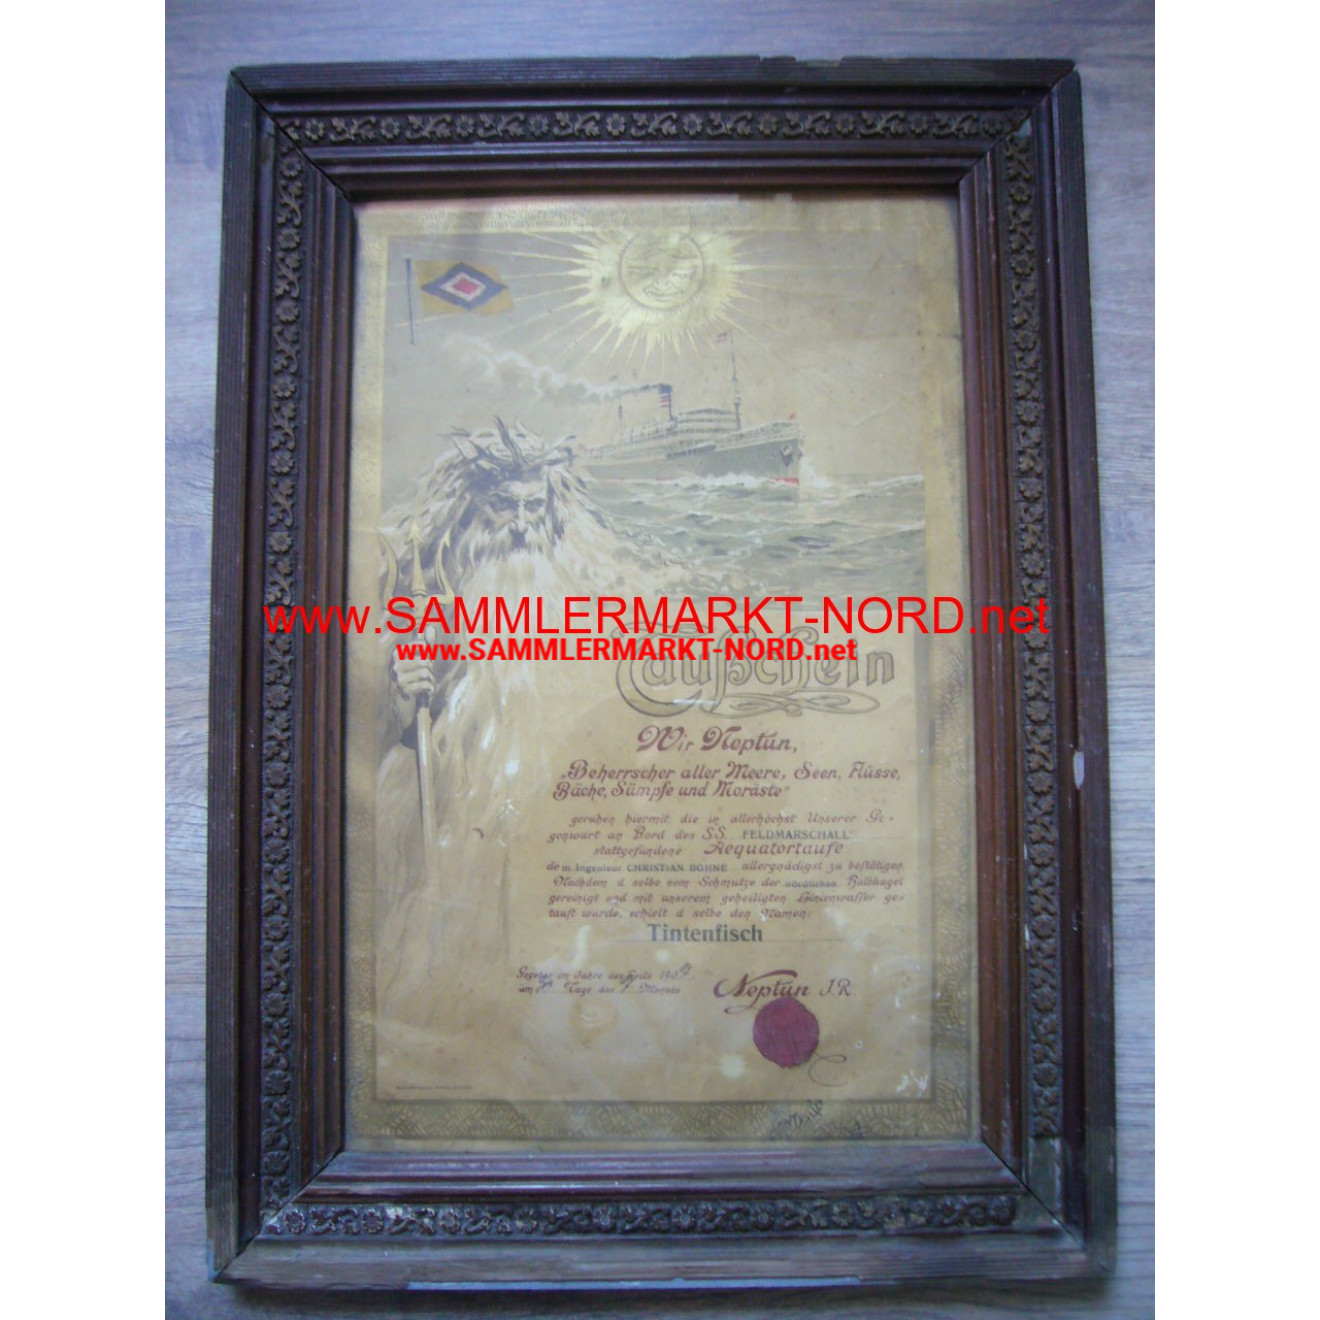 DAL German Africa Lines - equator baptismal certificate 1907